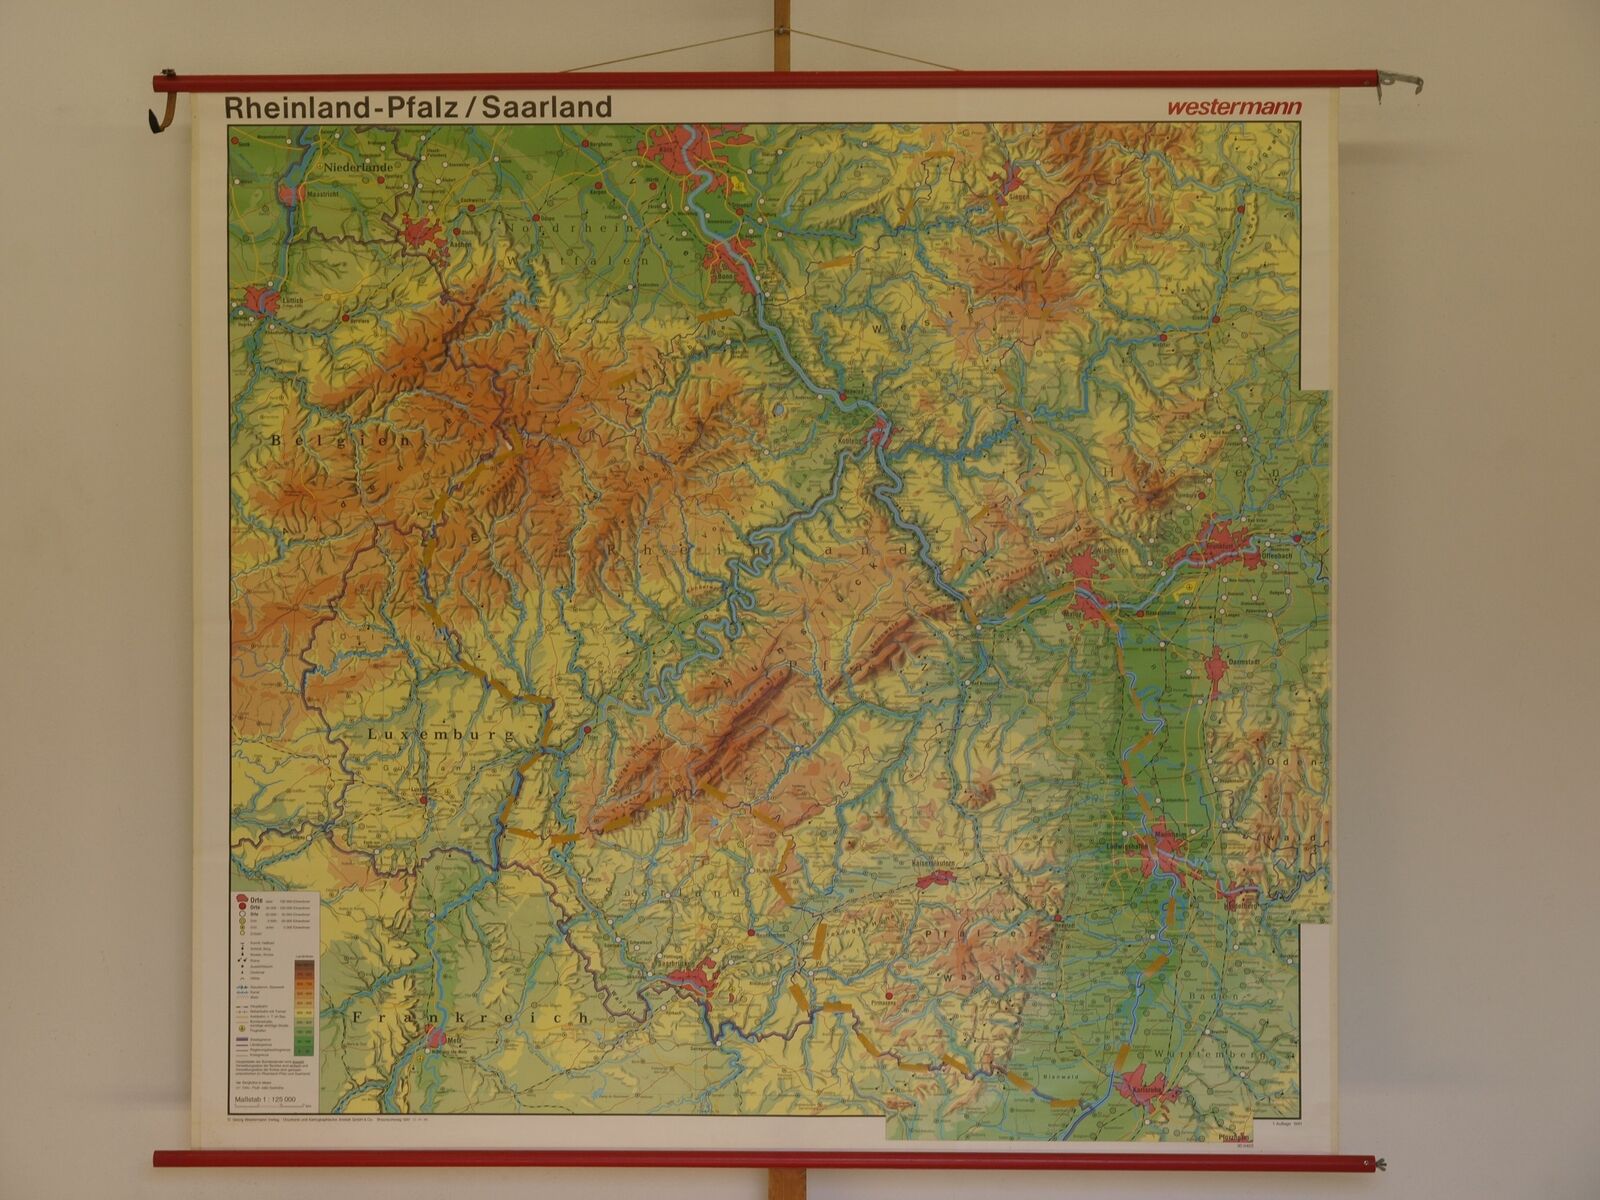 Rhineland-Palatinate And Saarland Physisch 1981 Schulwandkarte Wall Map